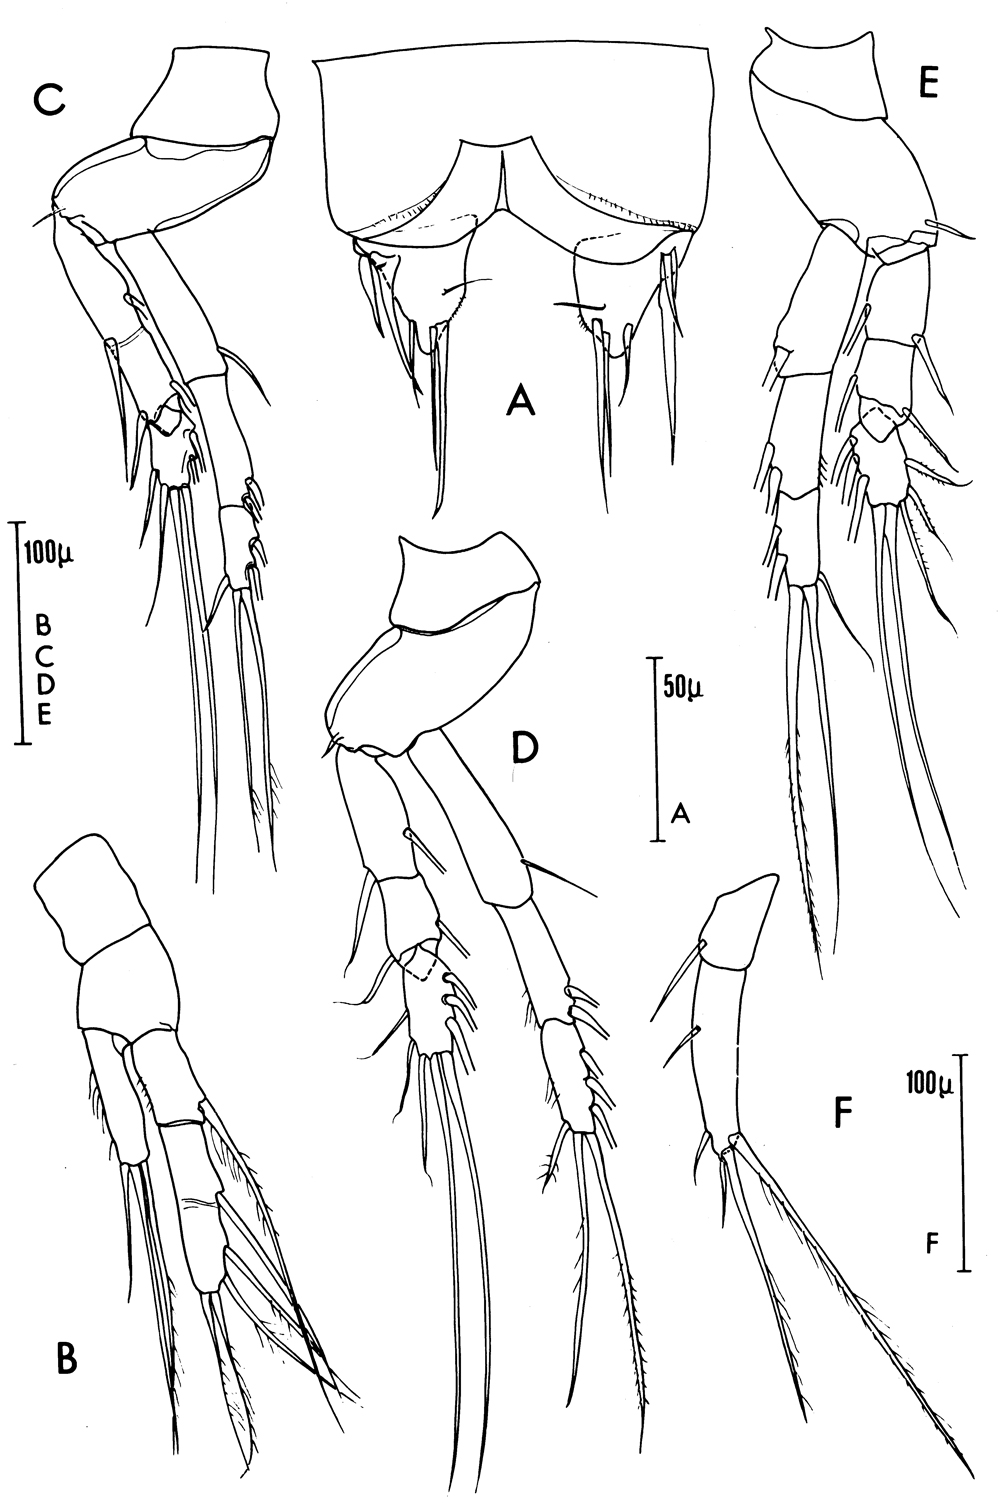 Species Goniopsyllus clausi - Plate 12 of morphological figures